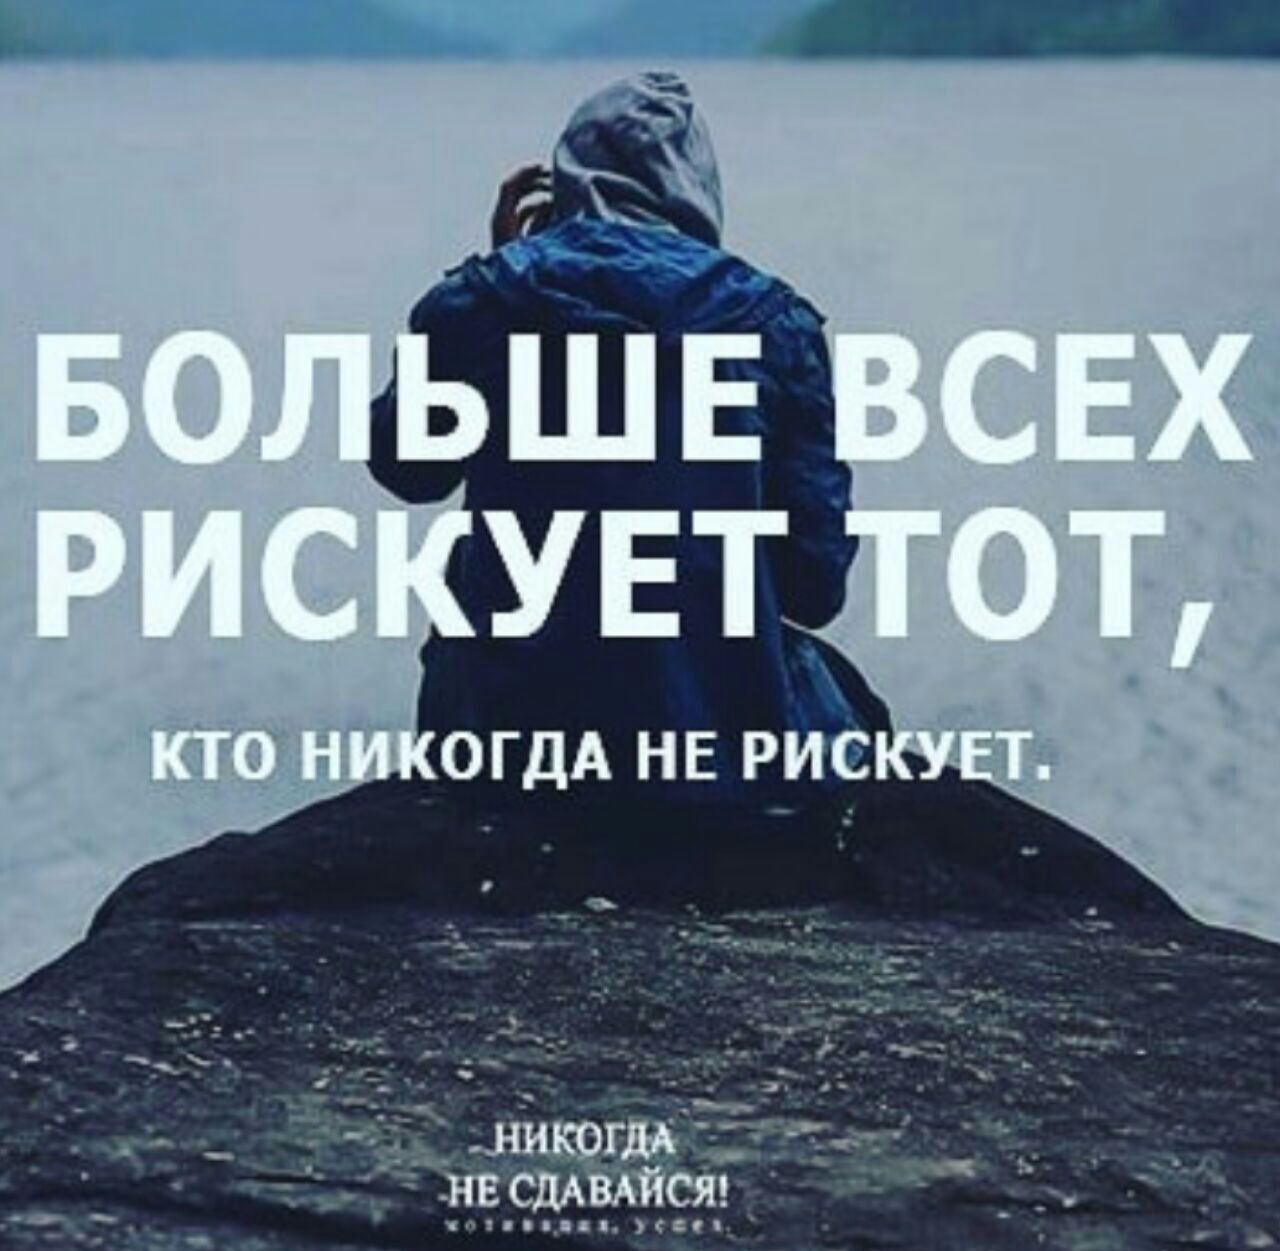 Кто не рискует тот - 📝 Афоризмо.ru